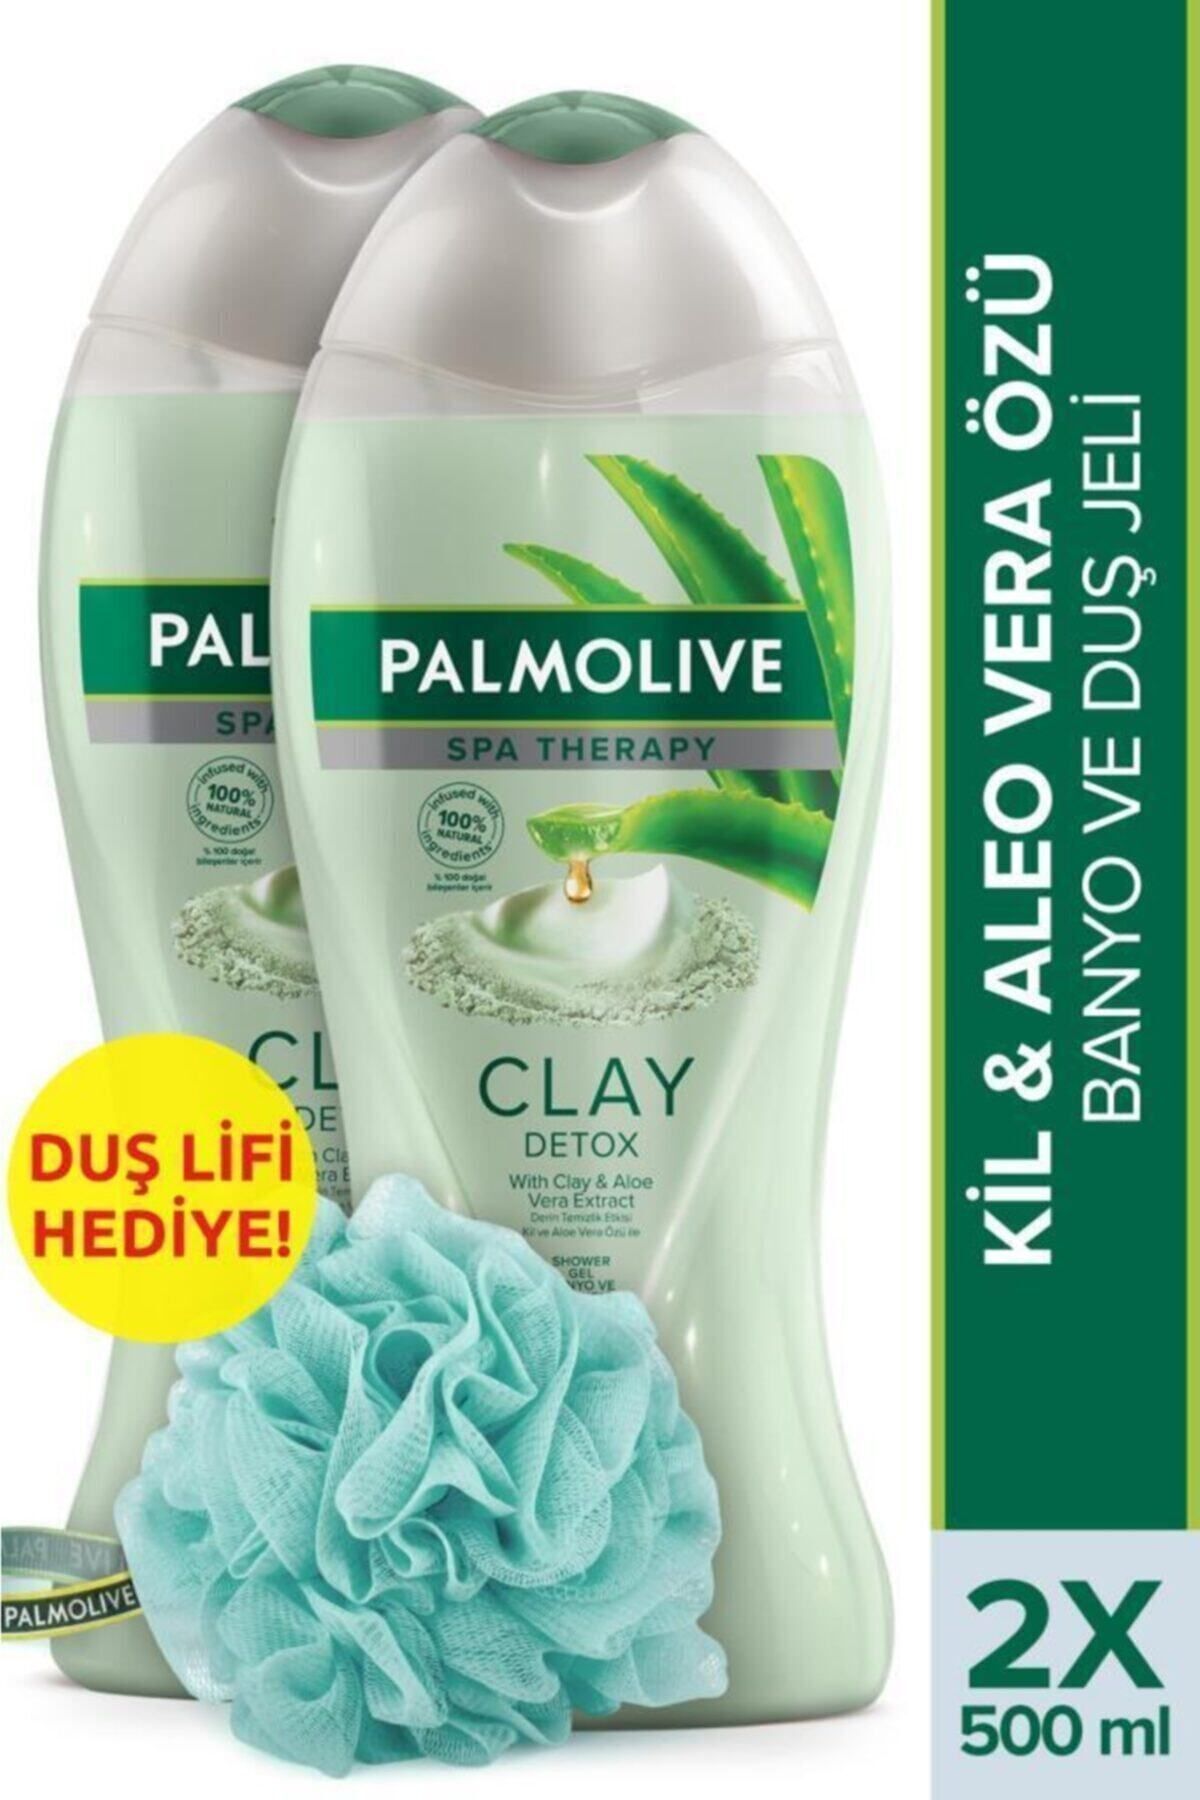 Palmolive Spa Therapy Clay Detox Kil ve Aloe Vera Özü Banyo ve Duş Jeli 2 x 500 ml+ Duş Lifi Hediye